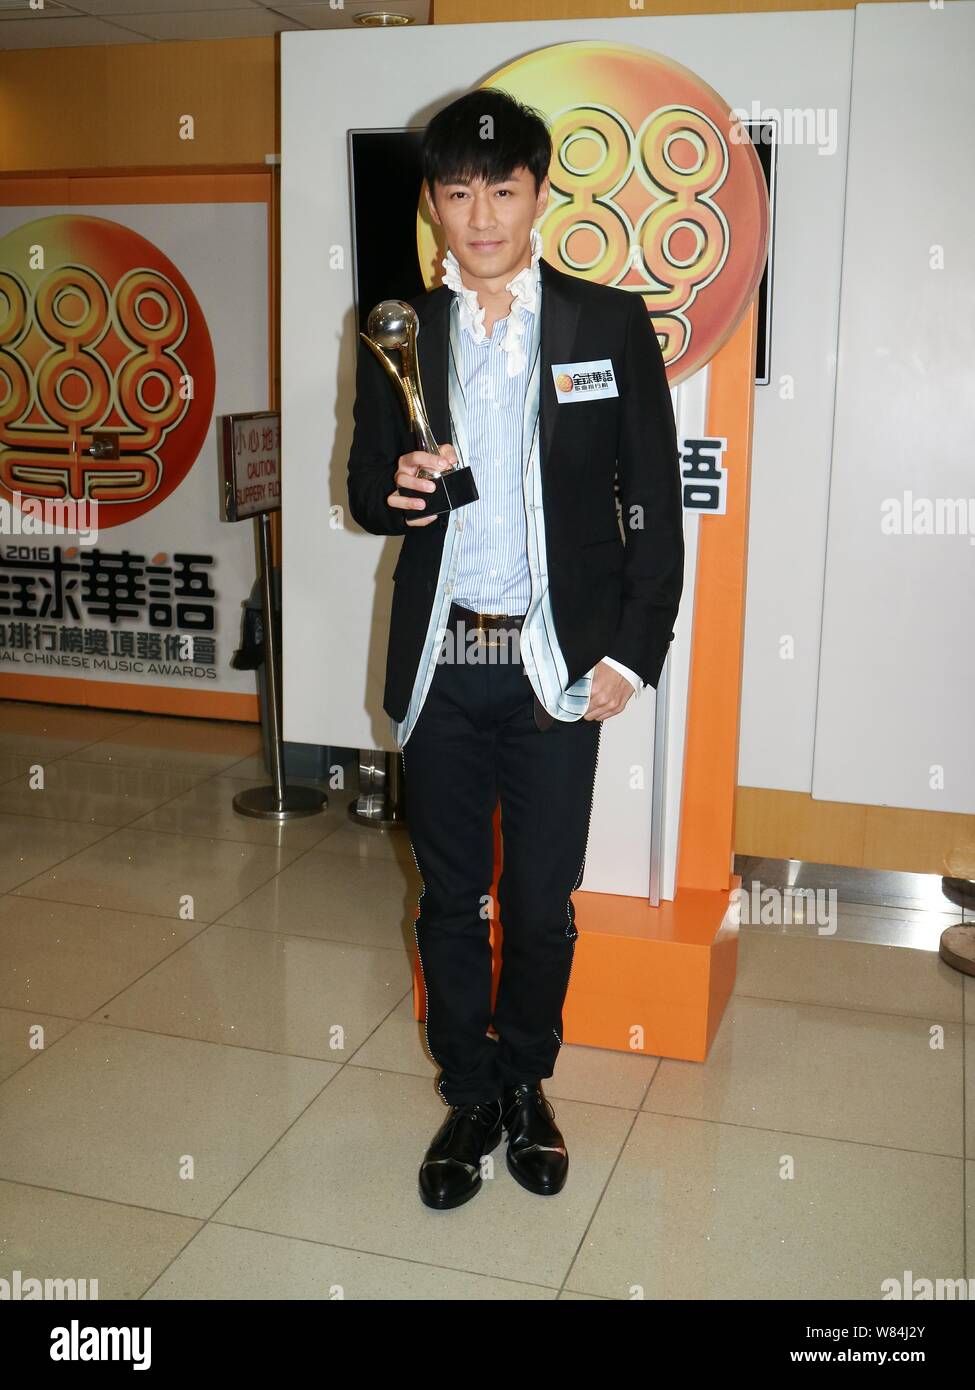 Hong Kong singer and actor Raymond Lam poses with his trophy at the 2016 Global Chinese Music Awards in Hong Kong, China, 19 October 2016. Stock Photo